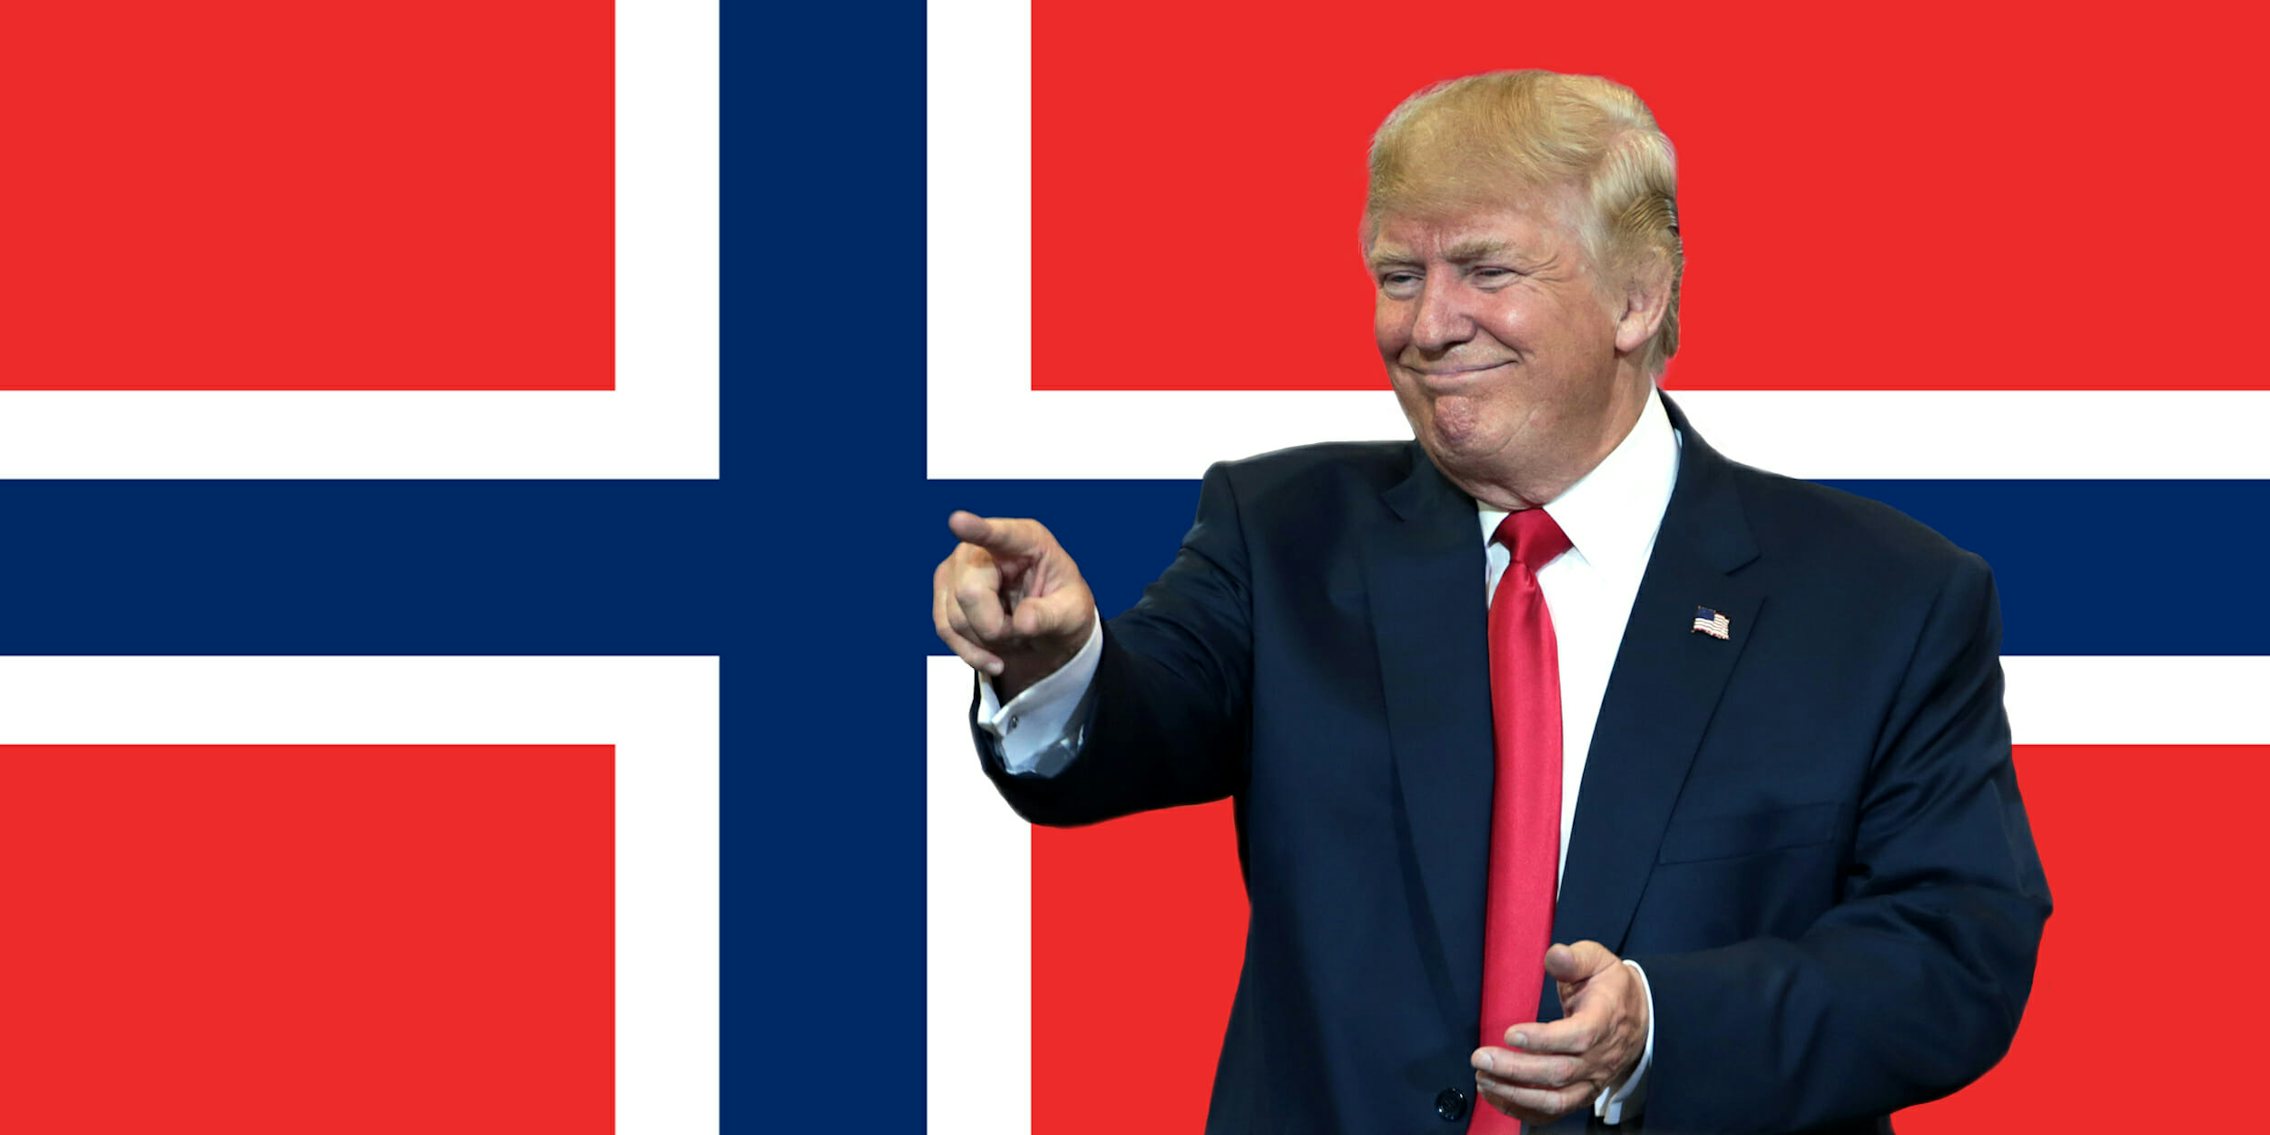 Donald 'shithole' Trump over a Norwegian flag